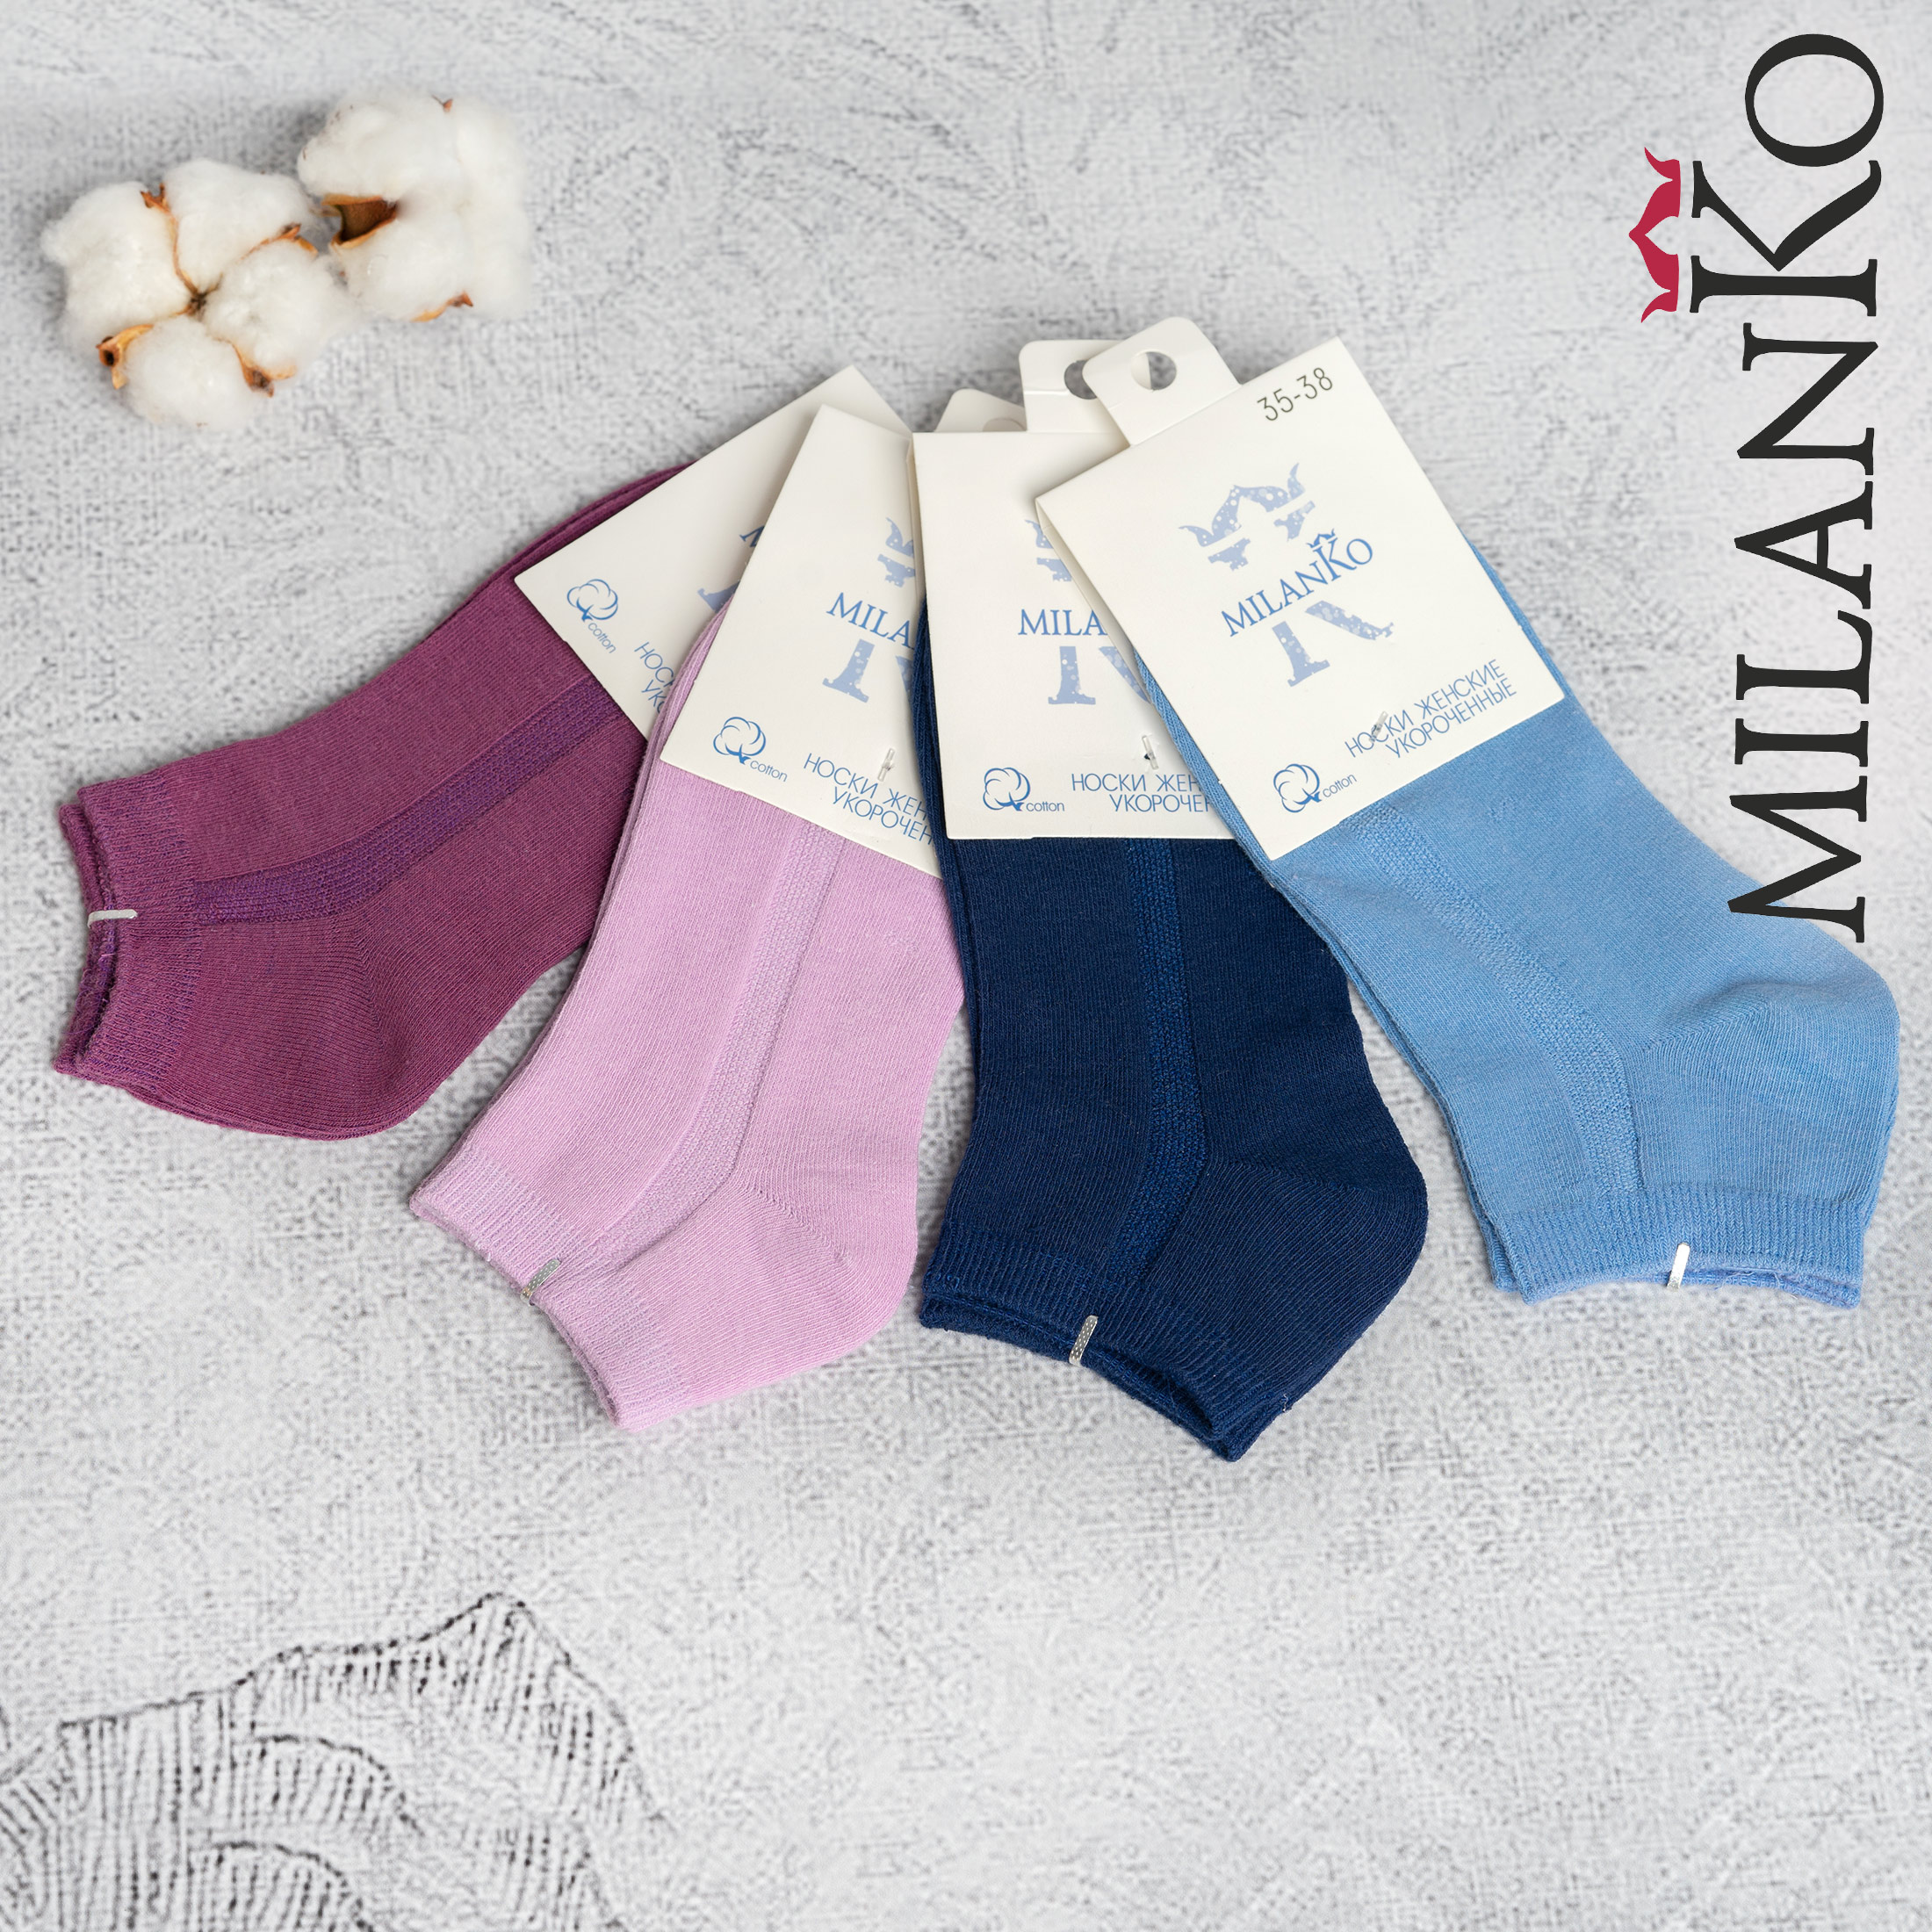 MILANKO    Женские укороченные носки MilanKo N-201